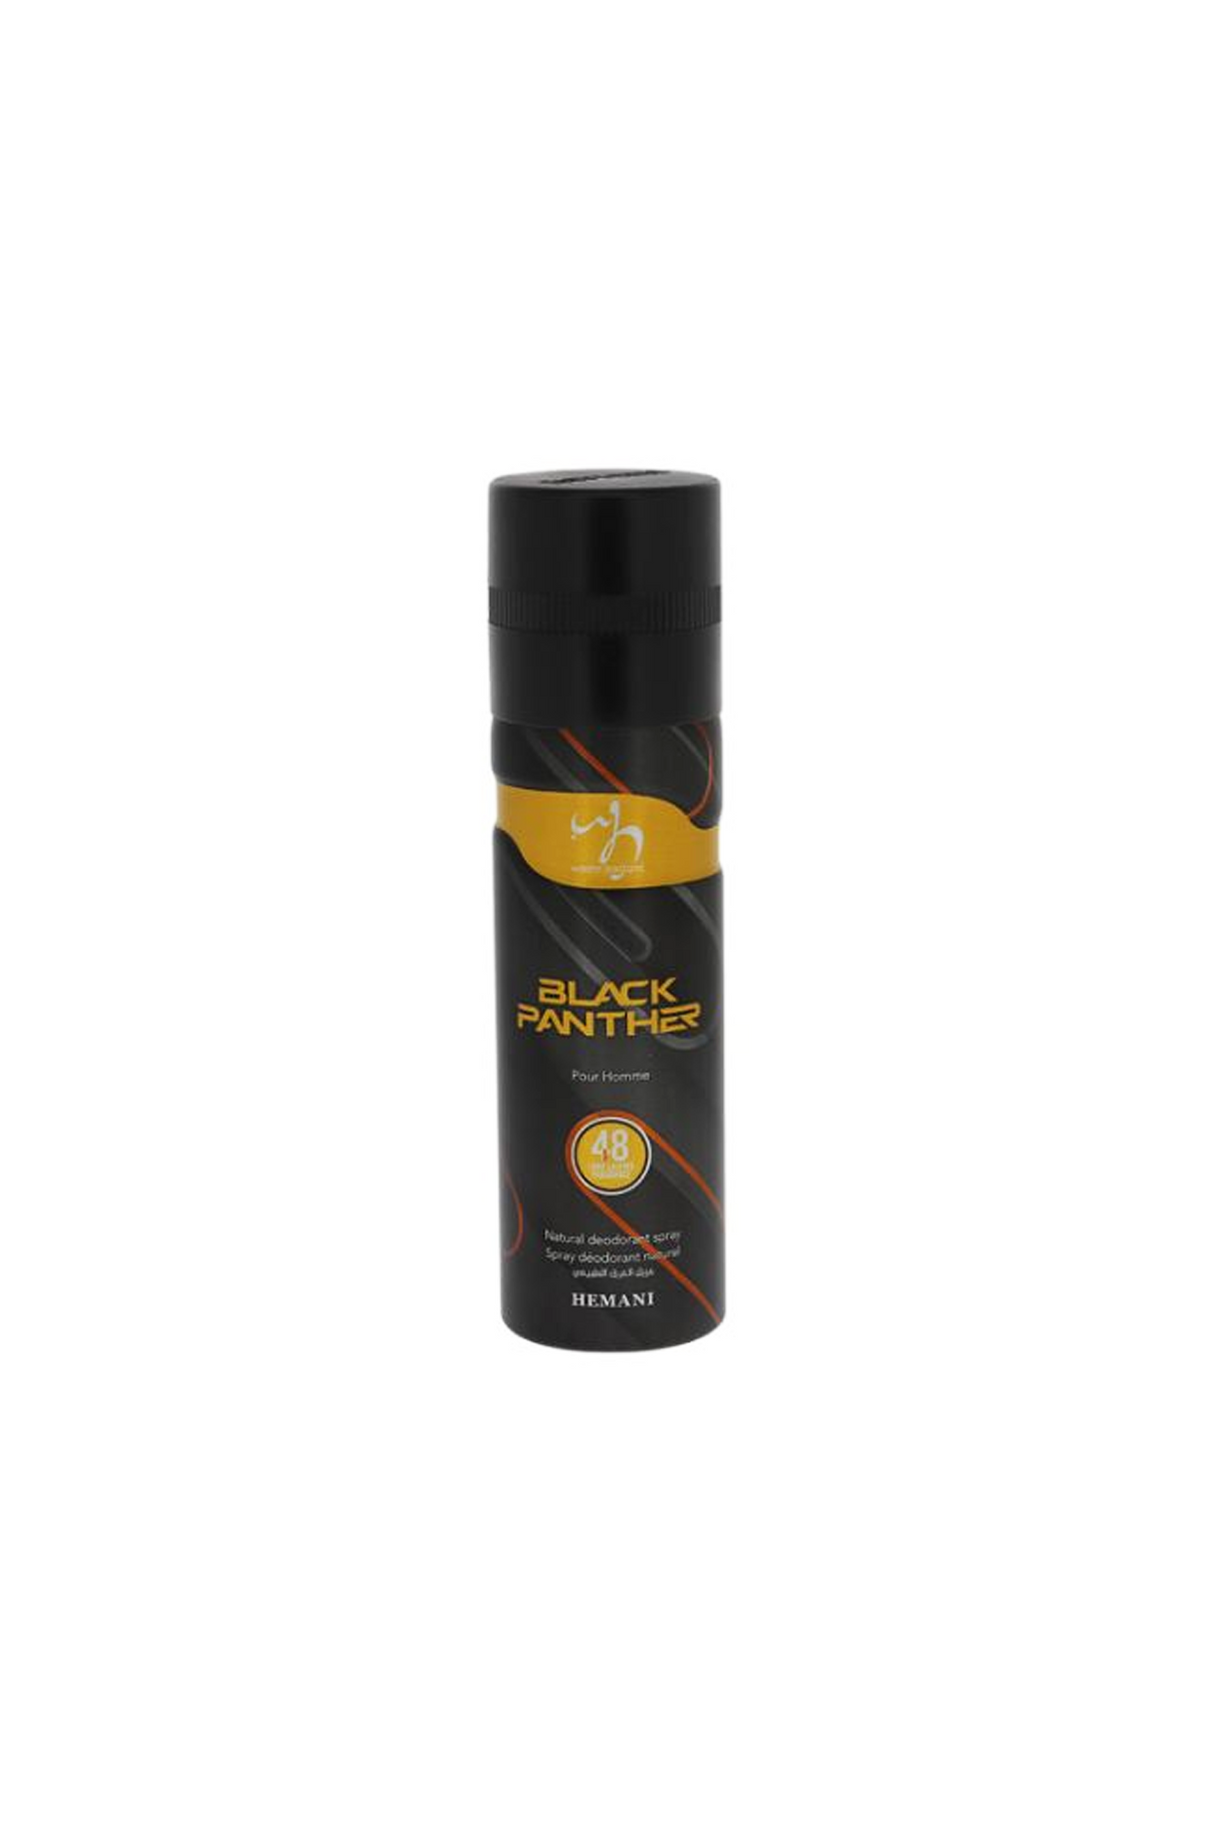 hemani black panther deodorant body spray 200ml for men